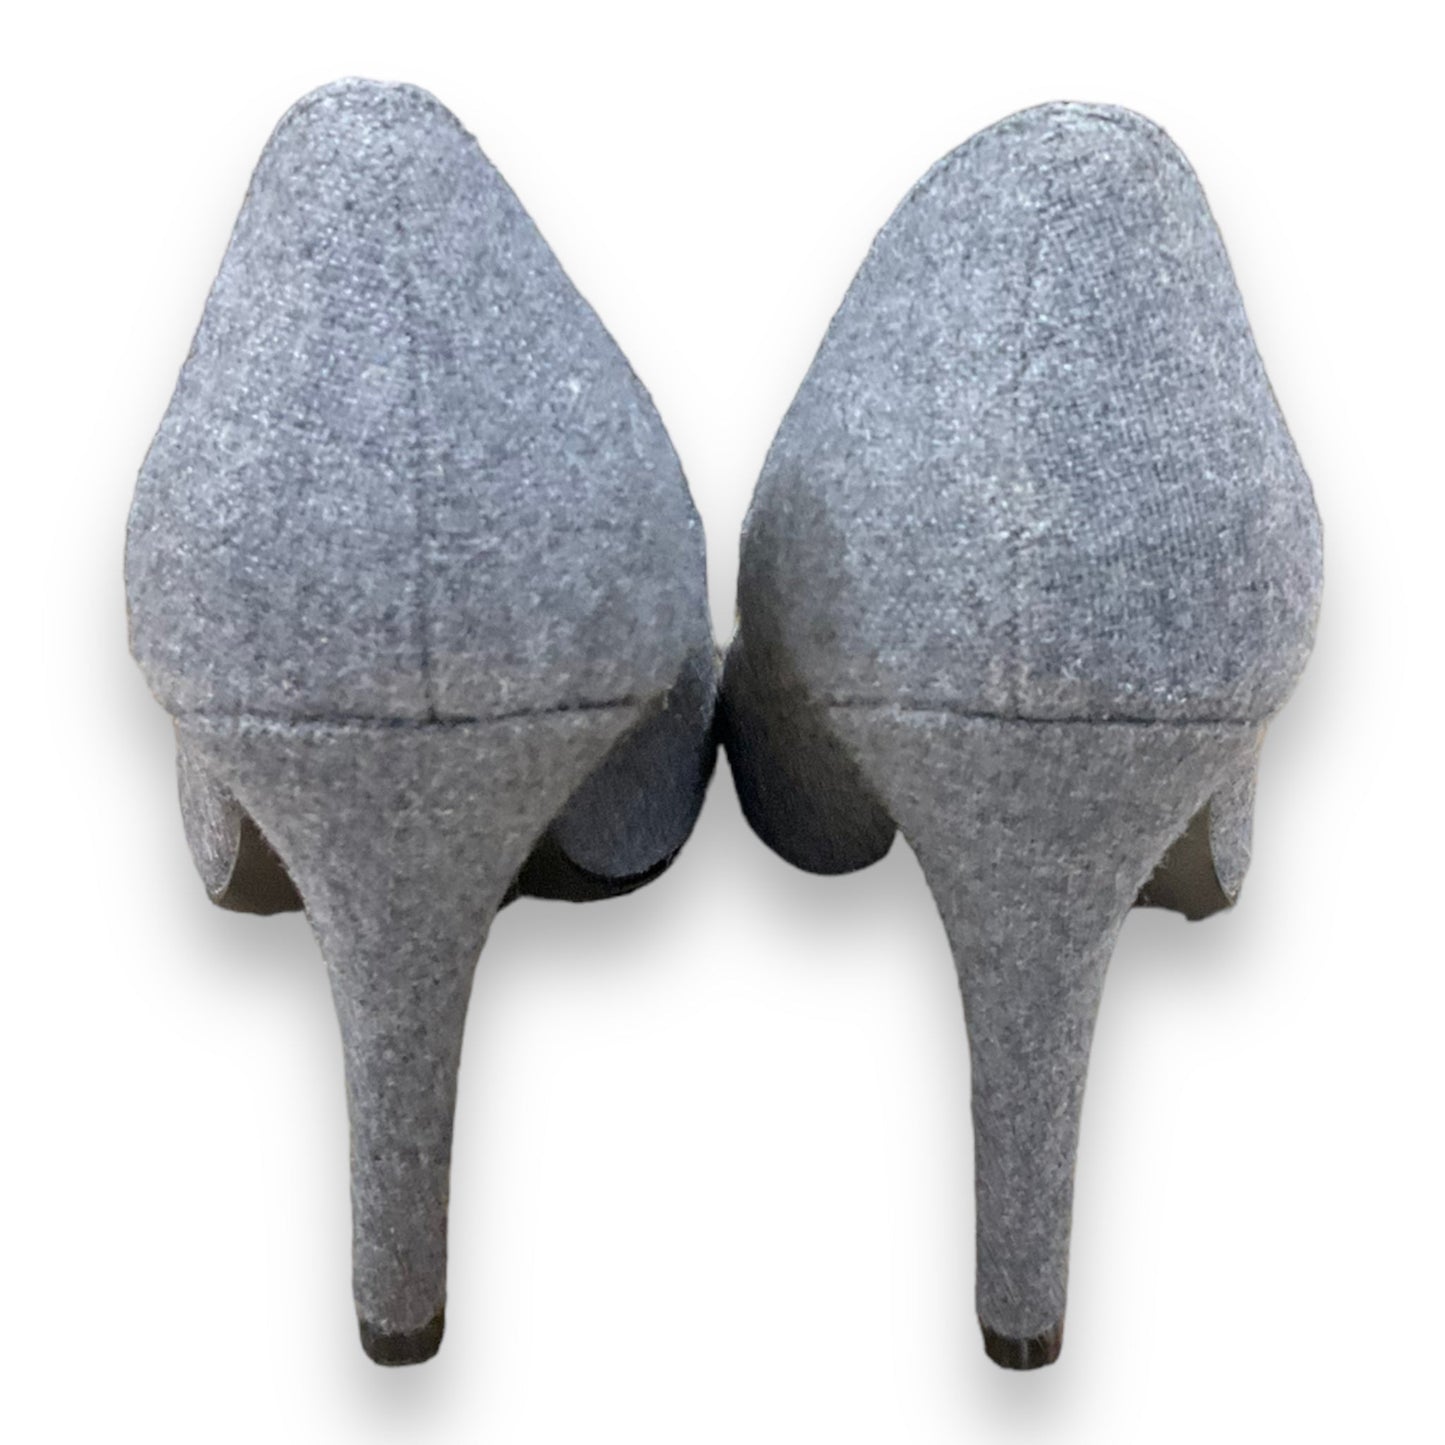 Shoes Heels Stiletto By Lc Lauren Conrad  Size: 6